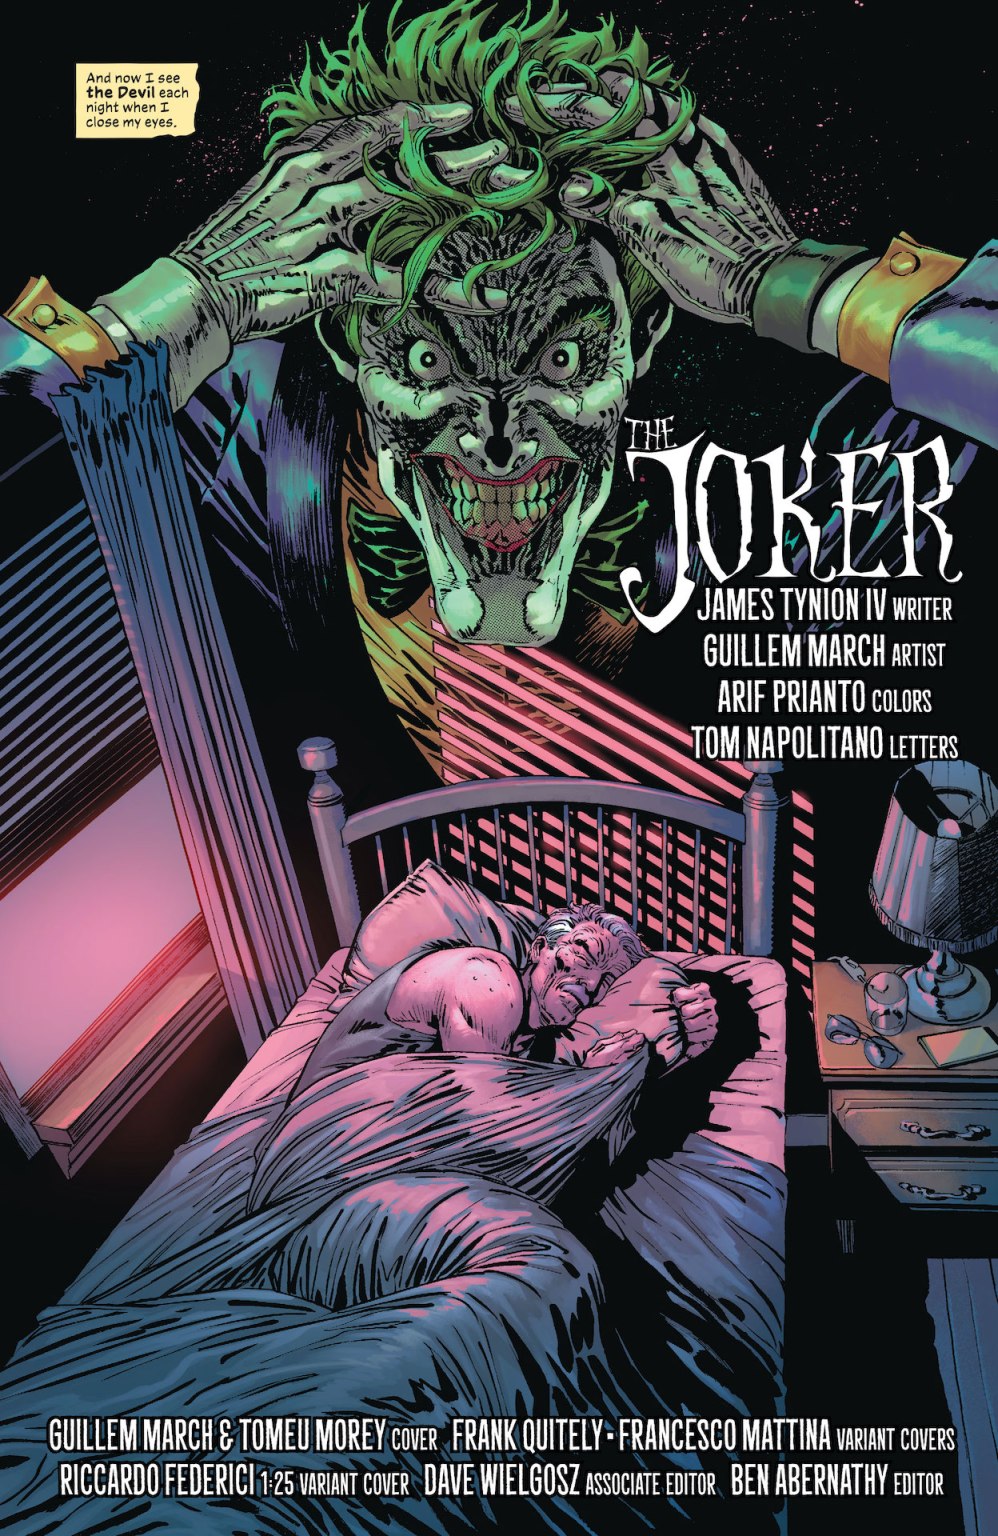 The Joker #1 preview